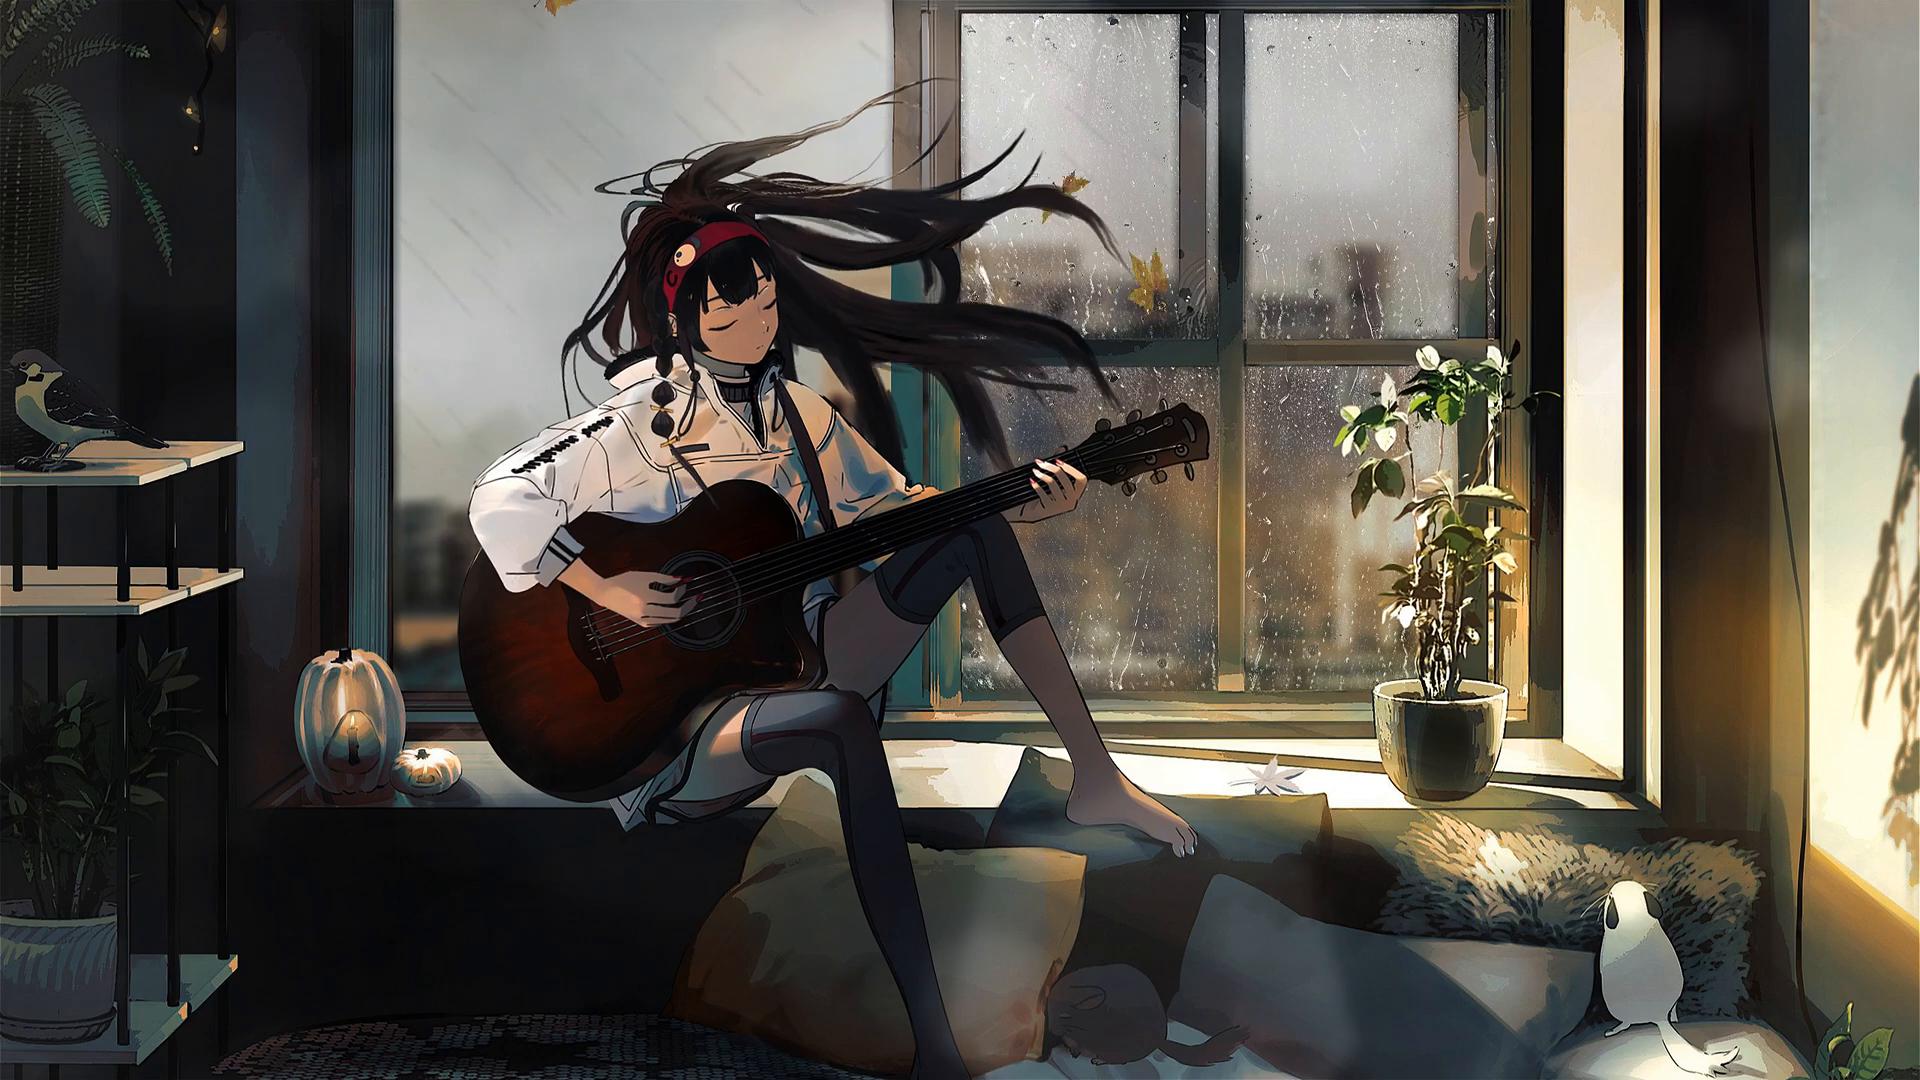 Anime guy music guitar wallpaper  2560x1440  825564  WallpaperUP